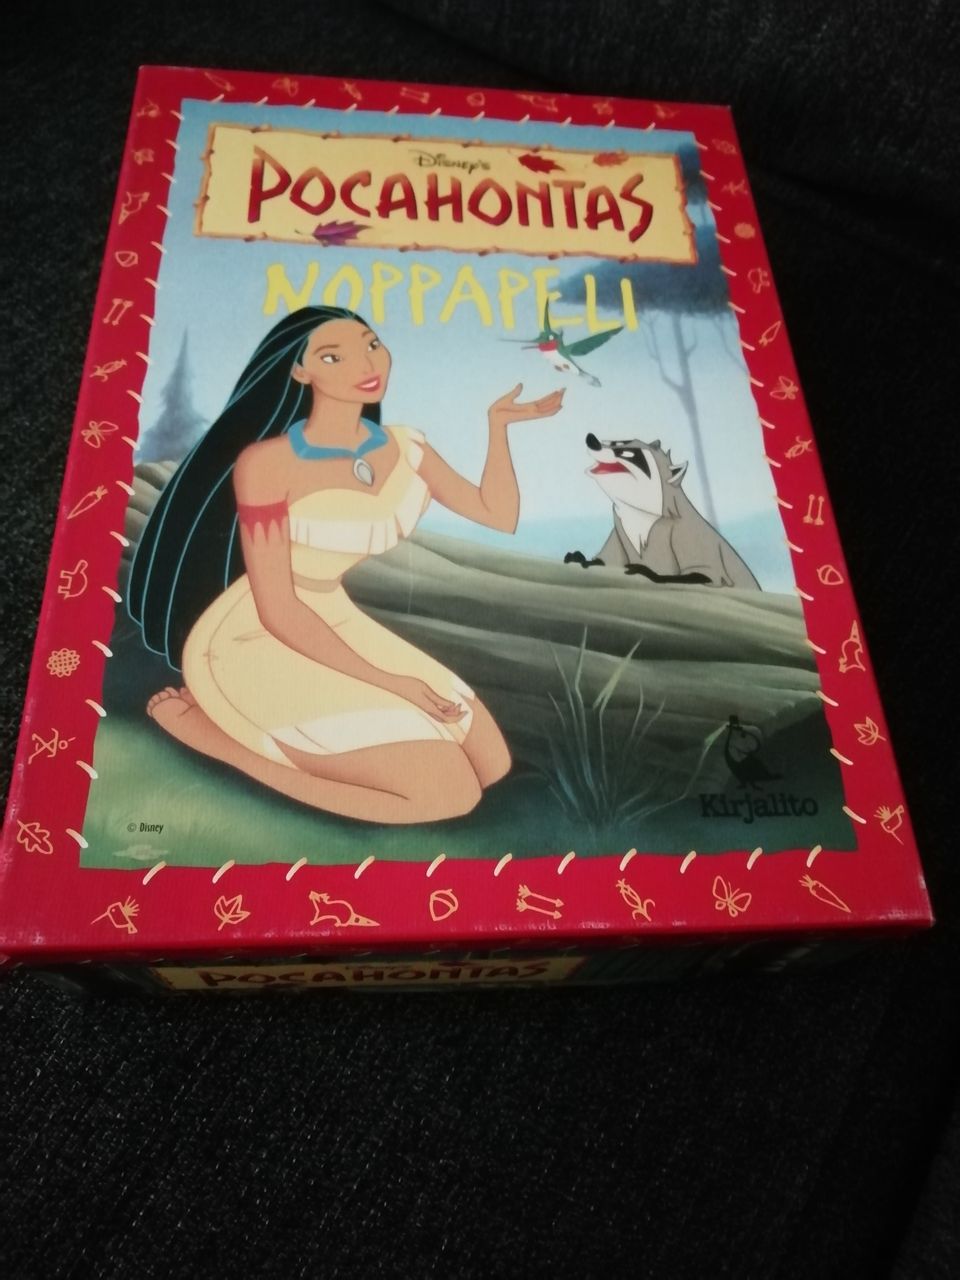 Pocahontas noppapeli / lautapeli